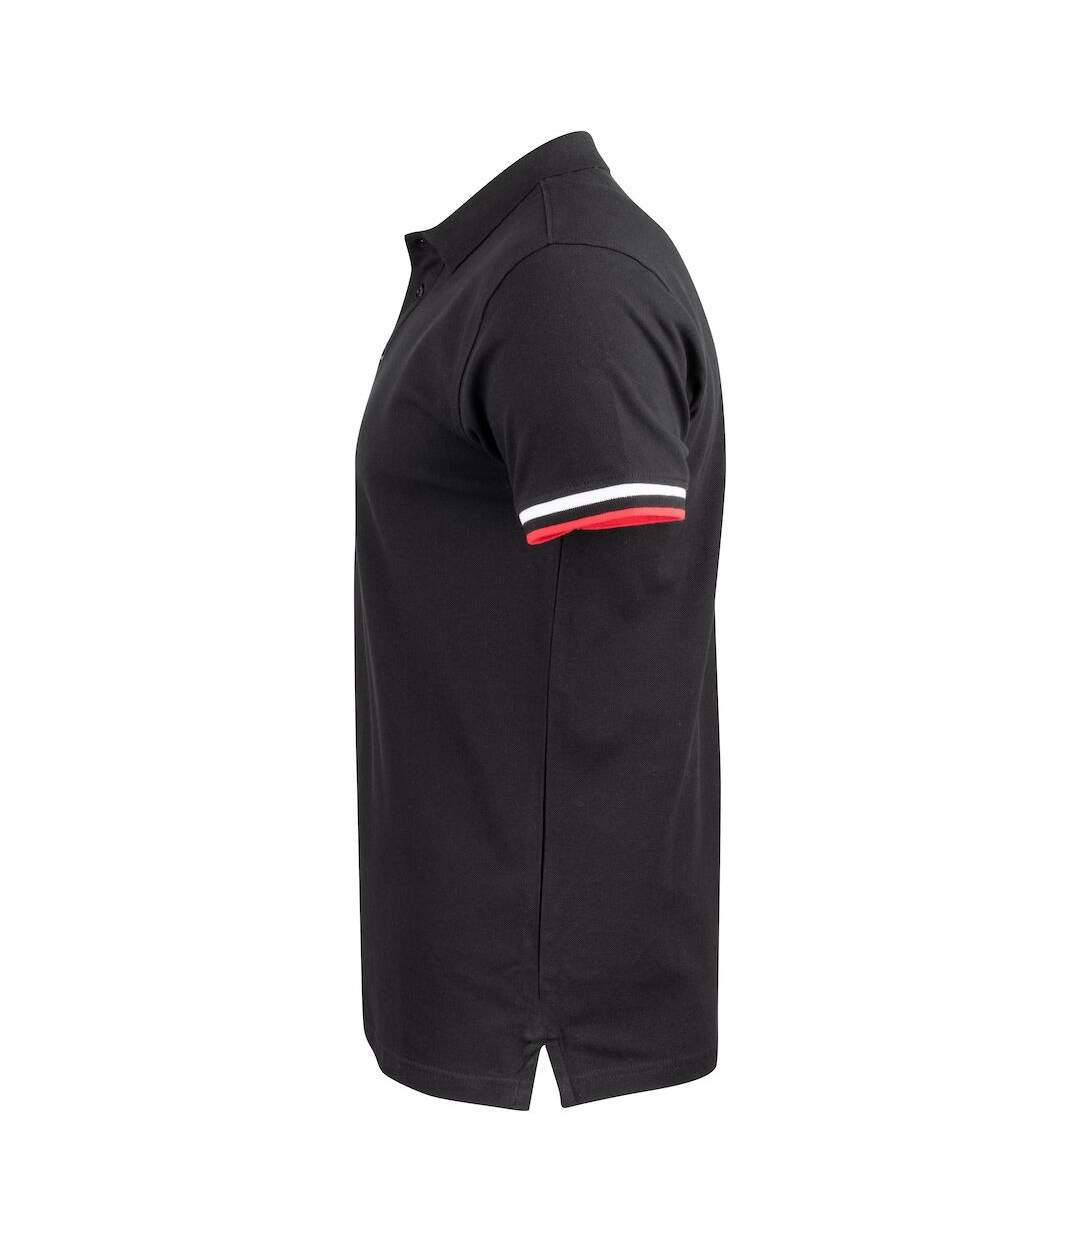 Clique Mens Newton Stripe Detail Polo Shirt (Black)